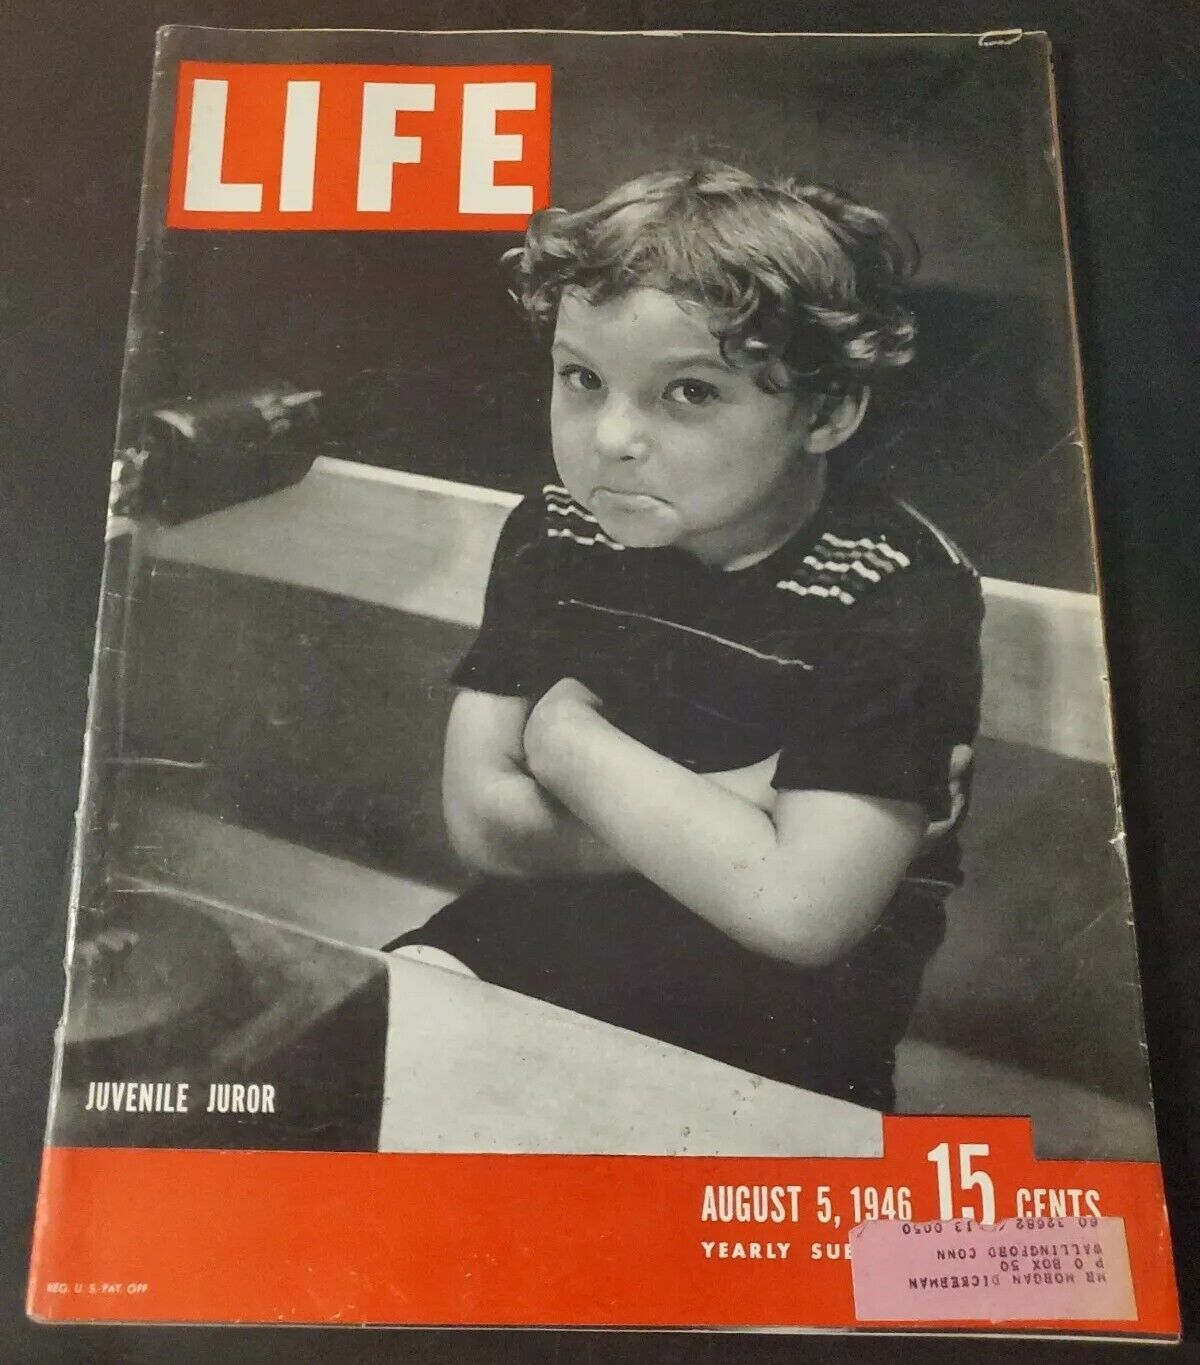 August 5, 1946 LIFE Magazine.  Bob Hope